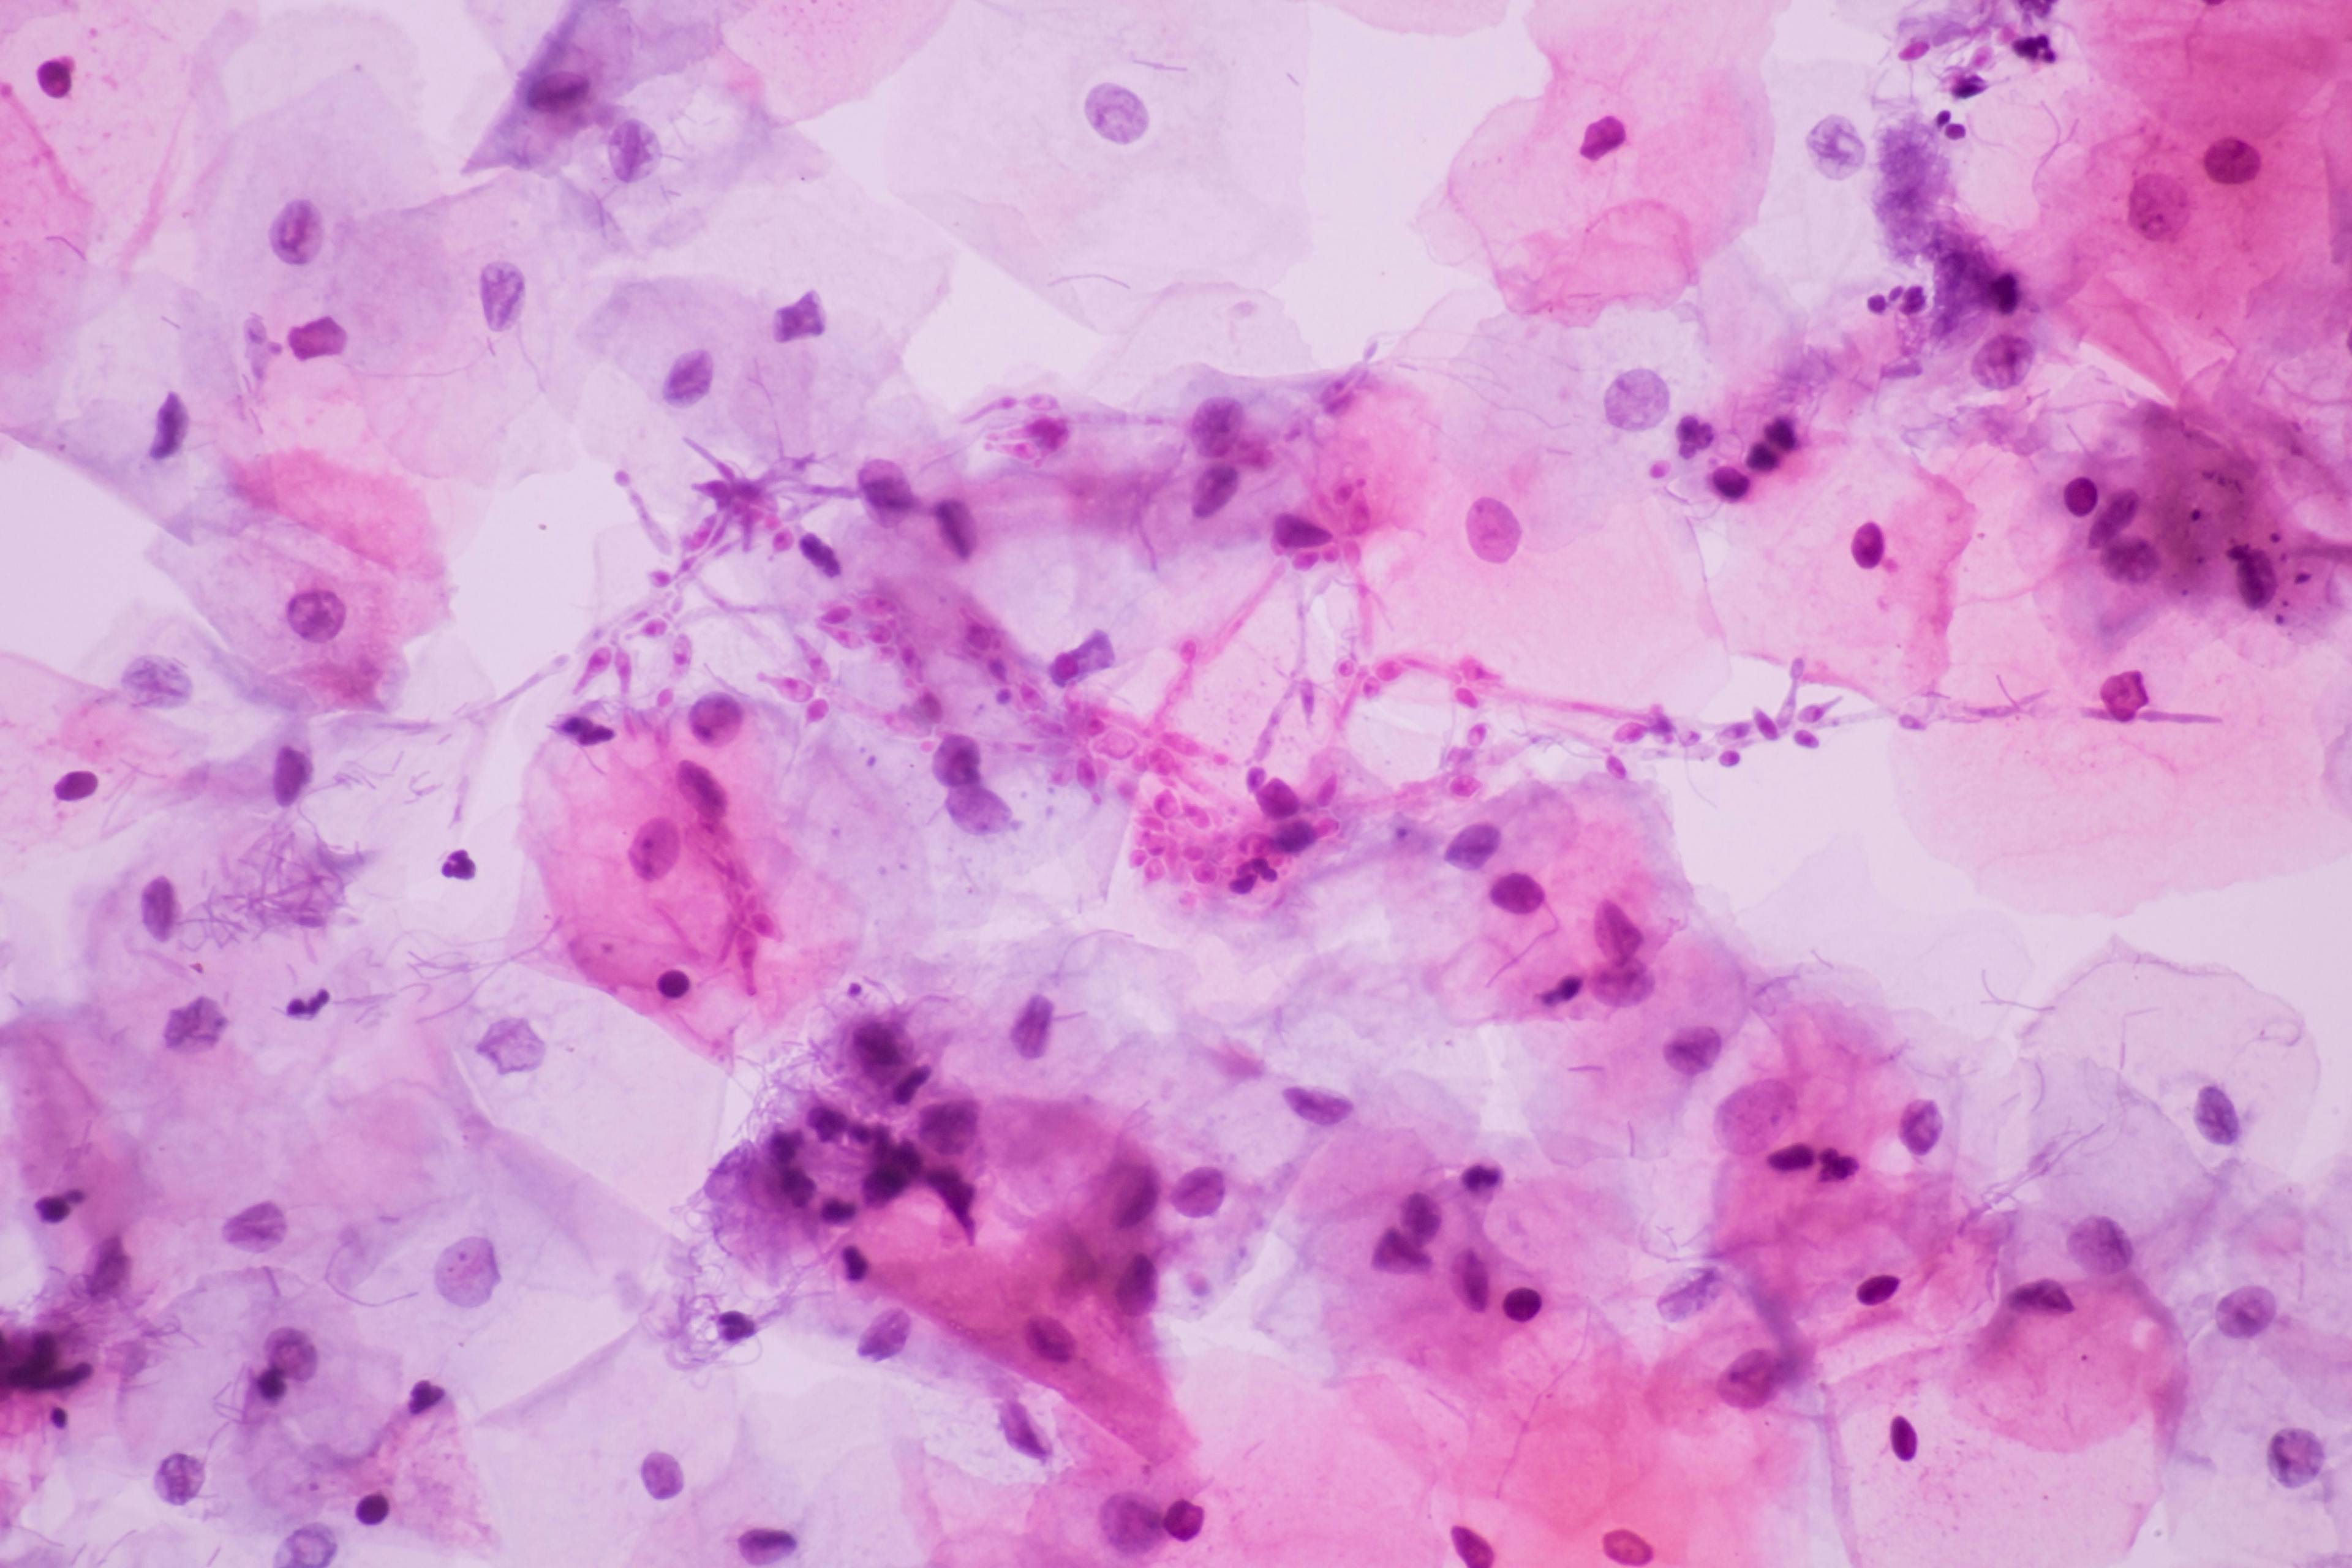 Image of gynecologic cancer cells: © arcyto - stock.adobe.com